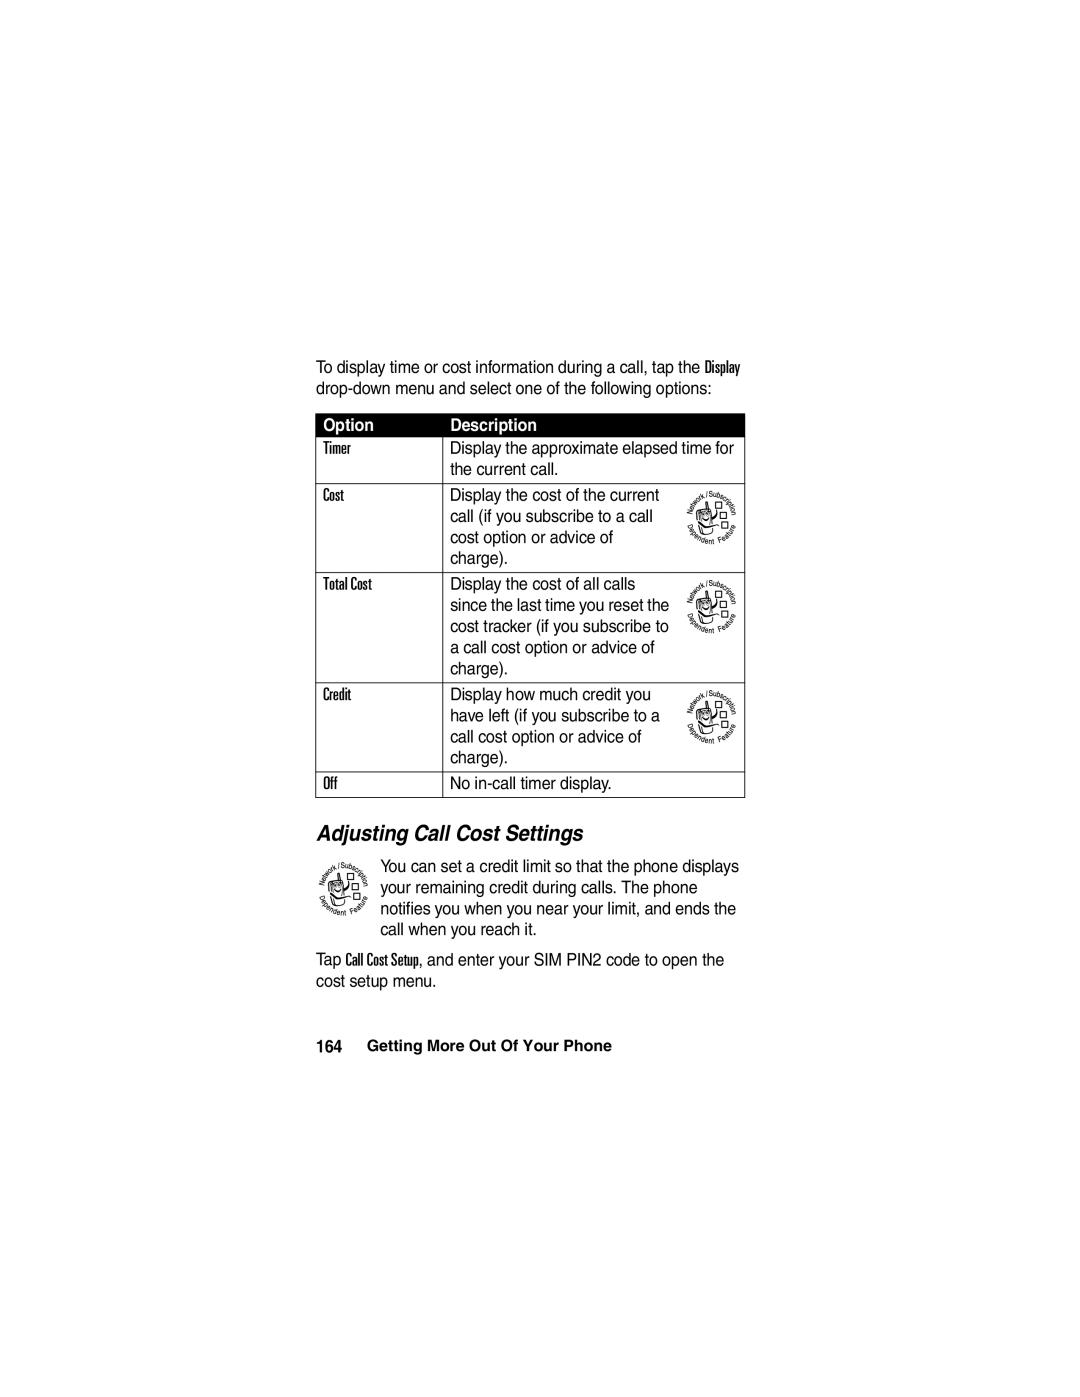 Motorola A780 manual Adjusting Call Cost Settings, Timer, Total Cost, Credit, Option, Description 